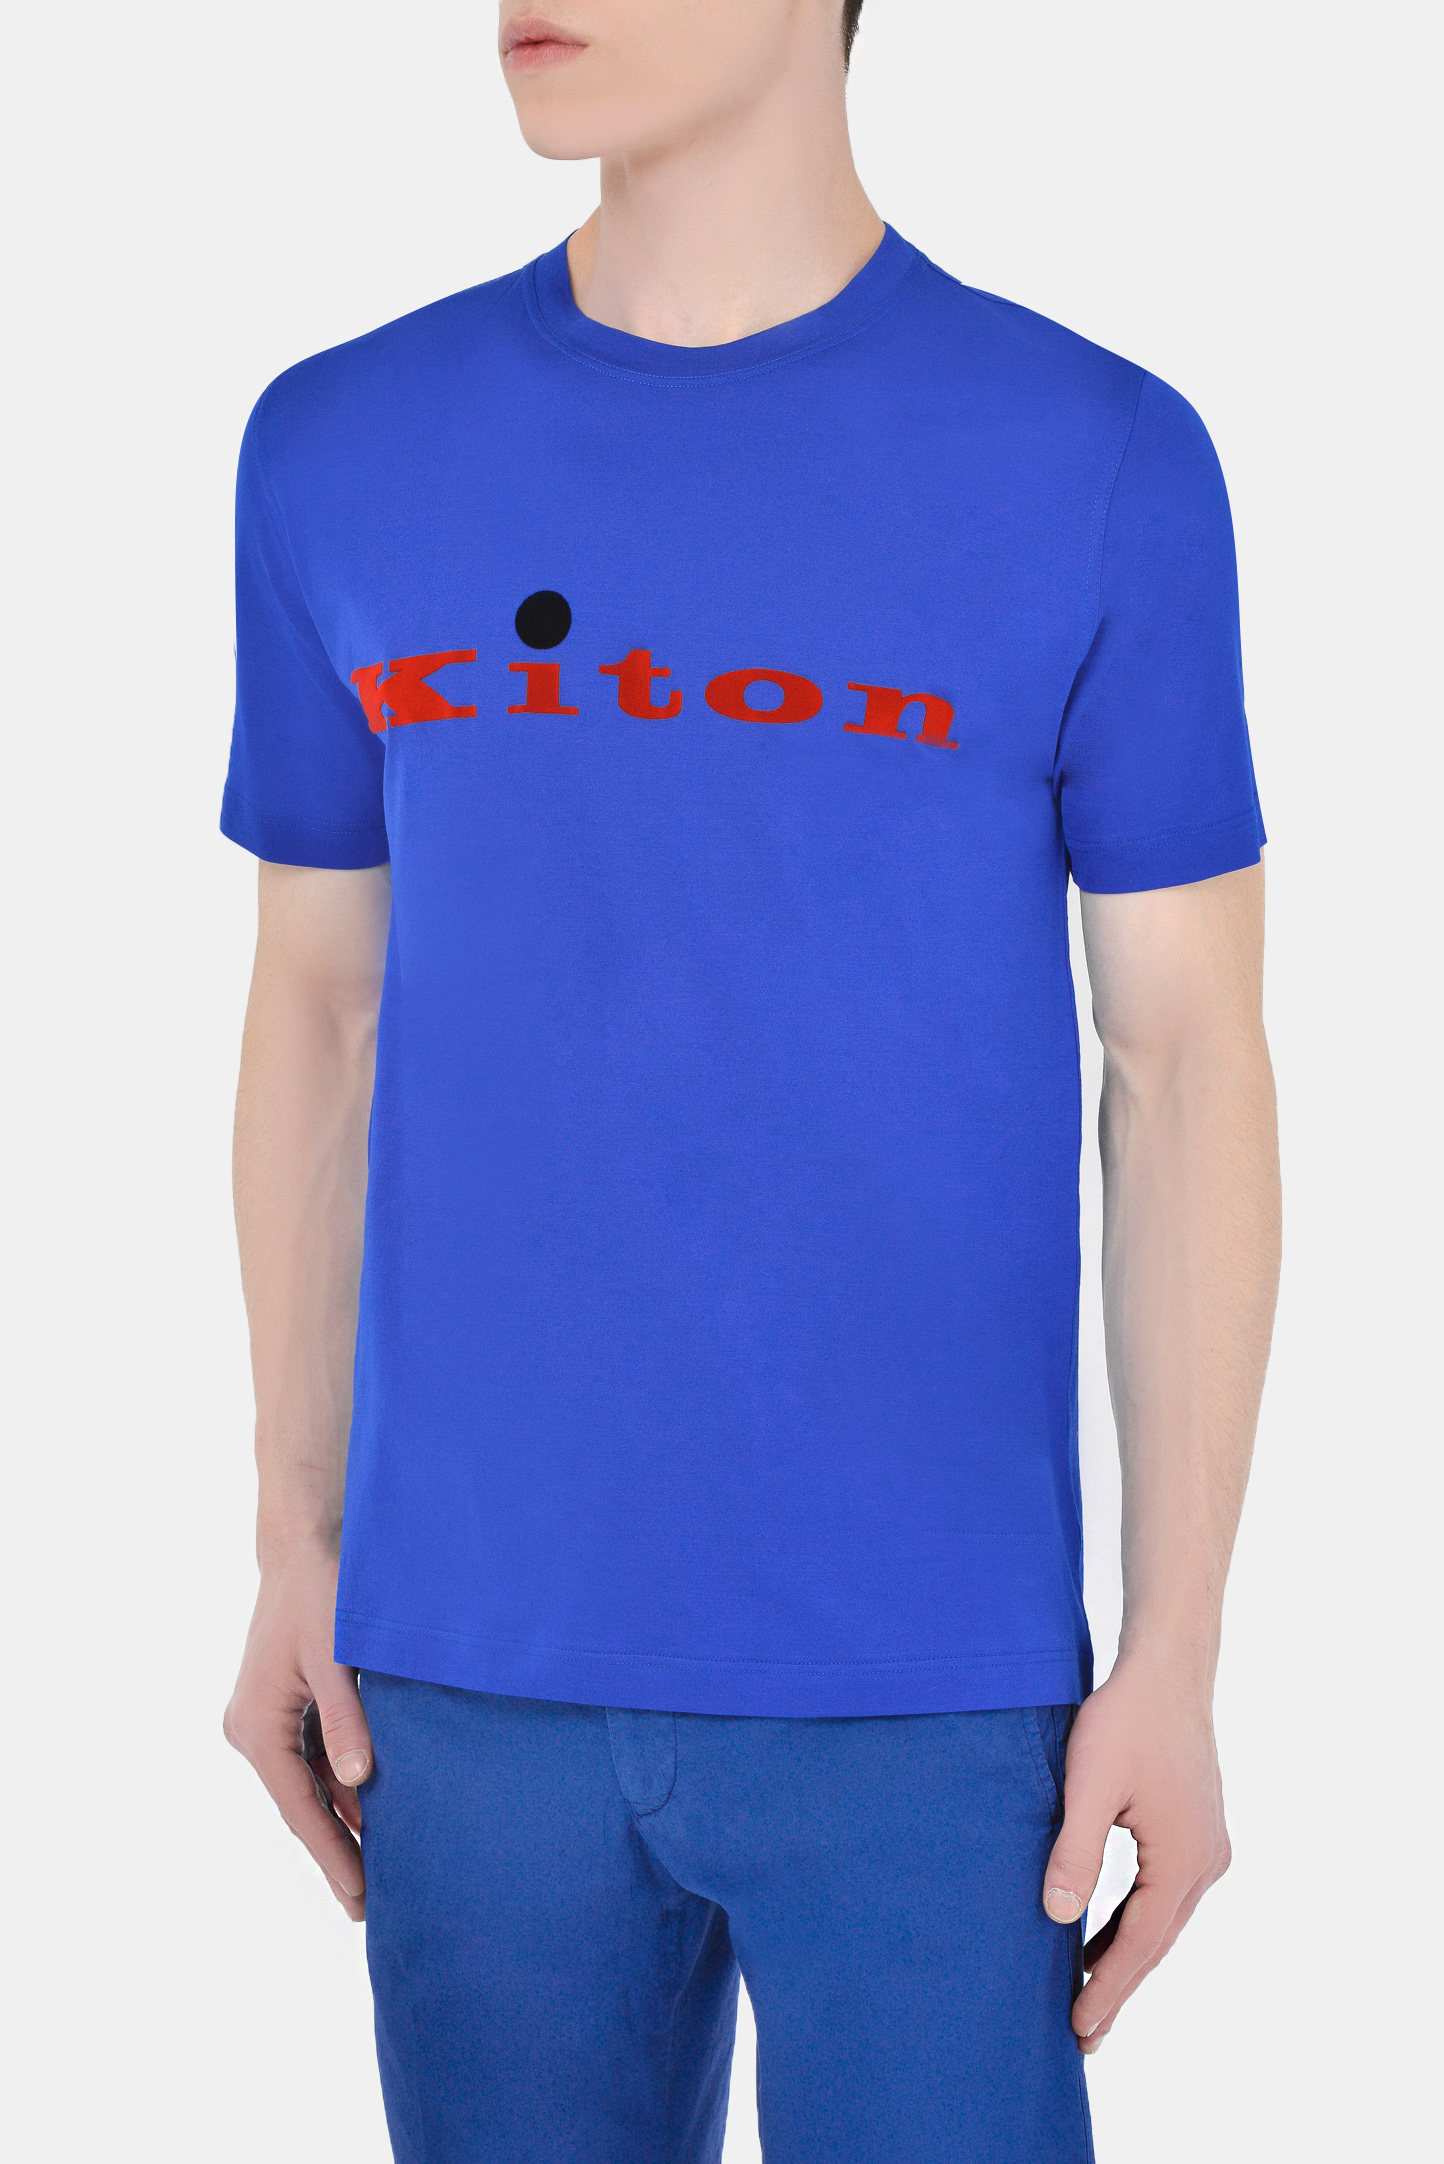 Свитер KITON UK1164E21K10, цвет: Синий, Мужской